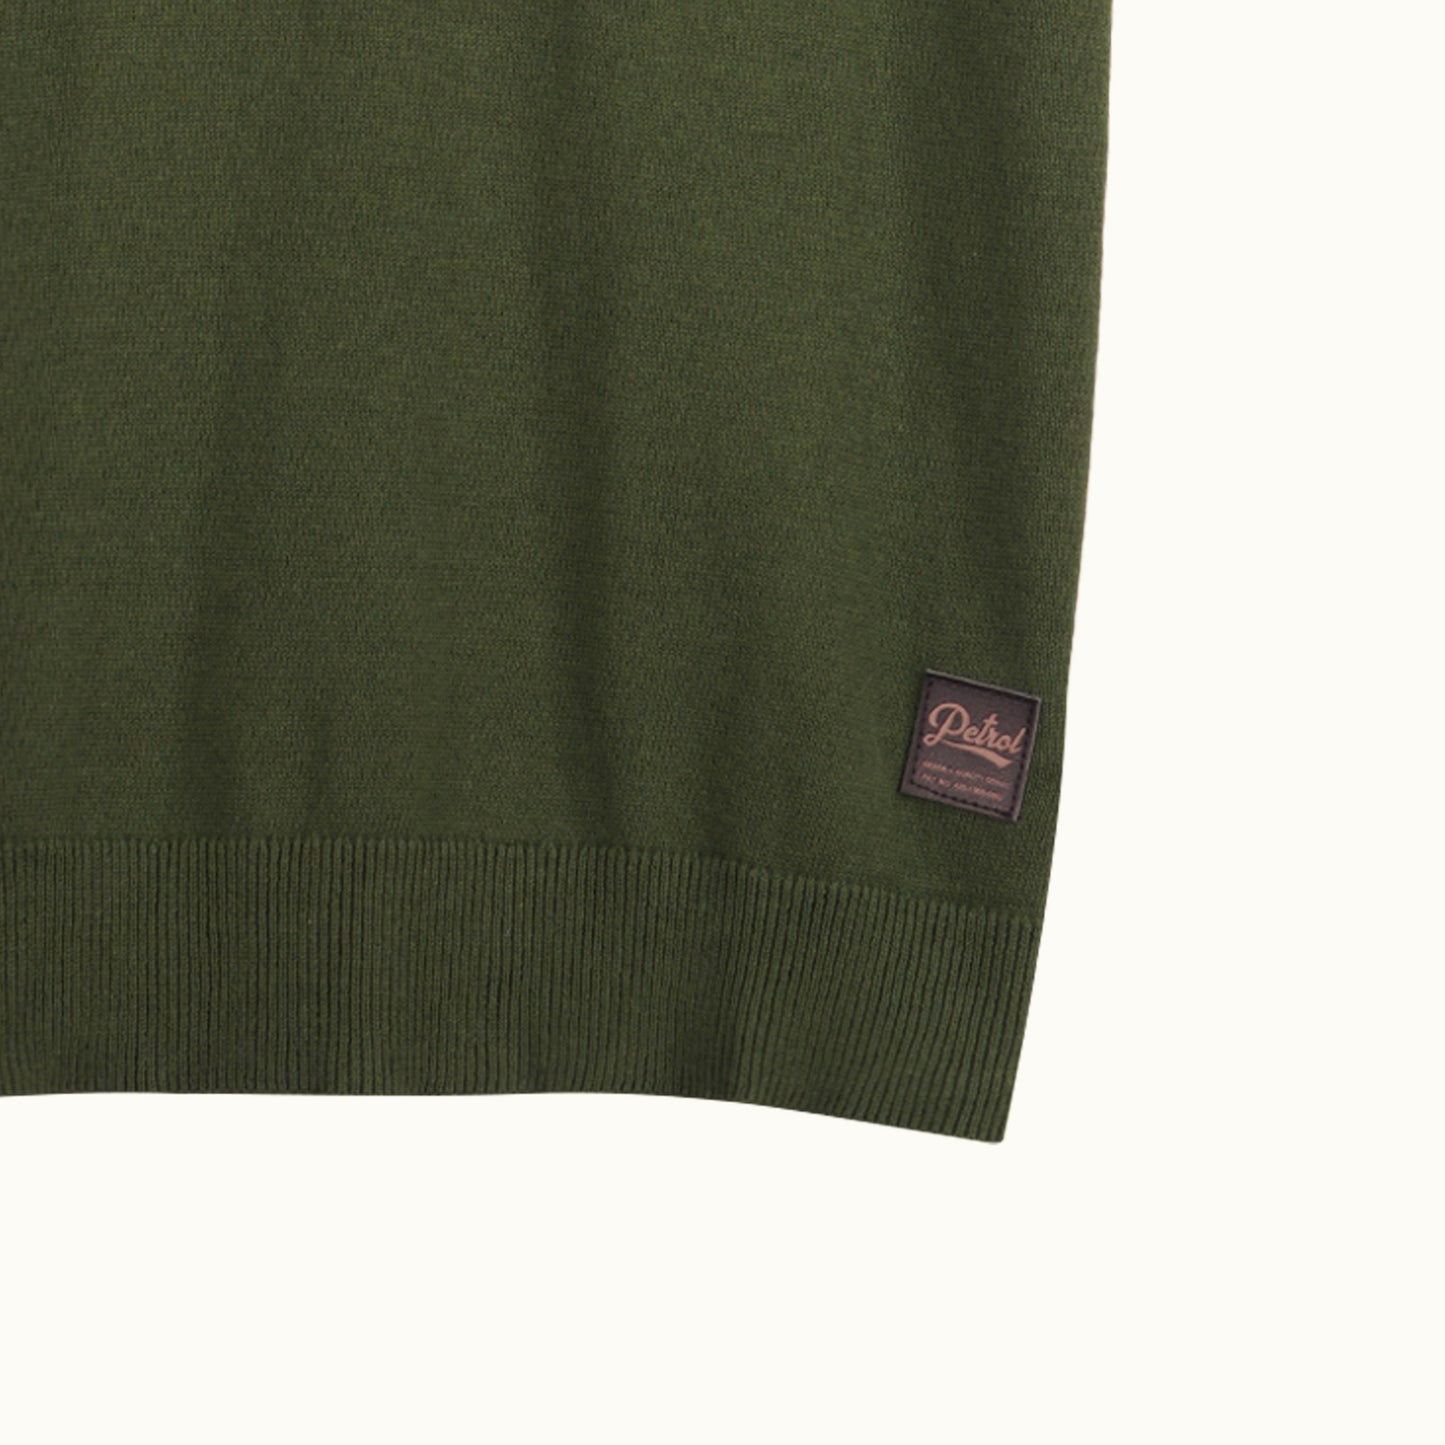 Petrol Basic Tees for Men Comfort Fitting Shirt Trendy fashion Casual Top Dark Green T-shirt for Men 140571 (Dark Green)